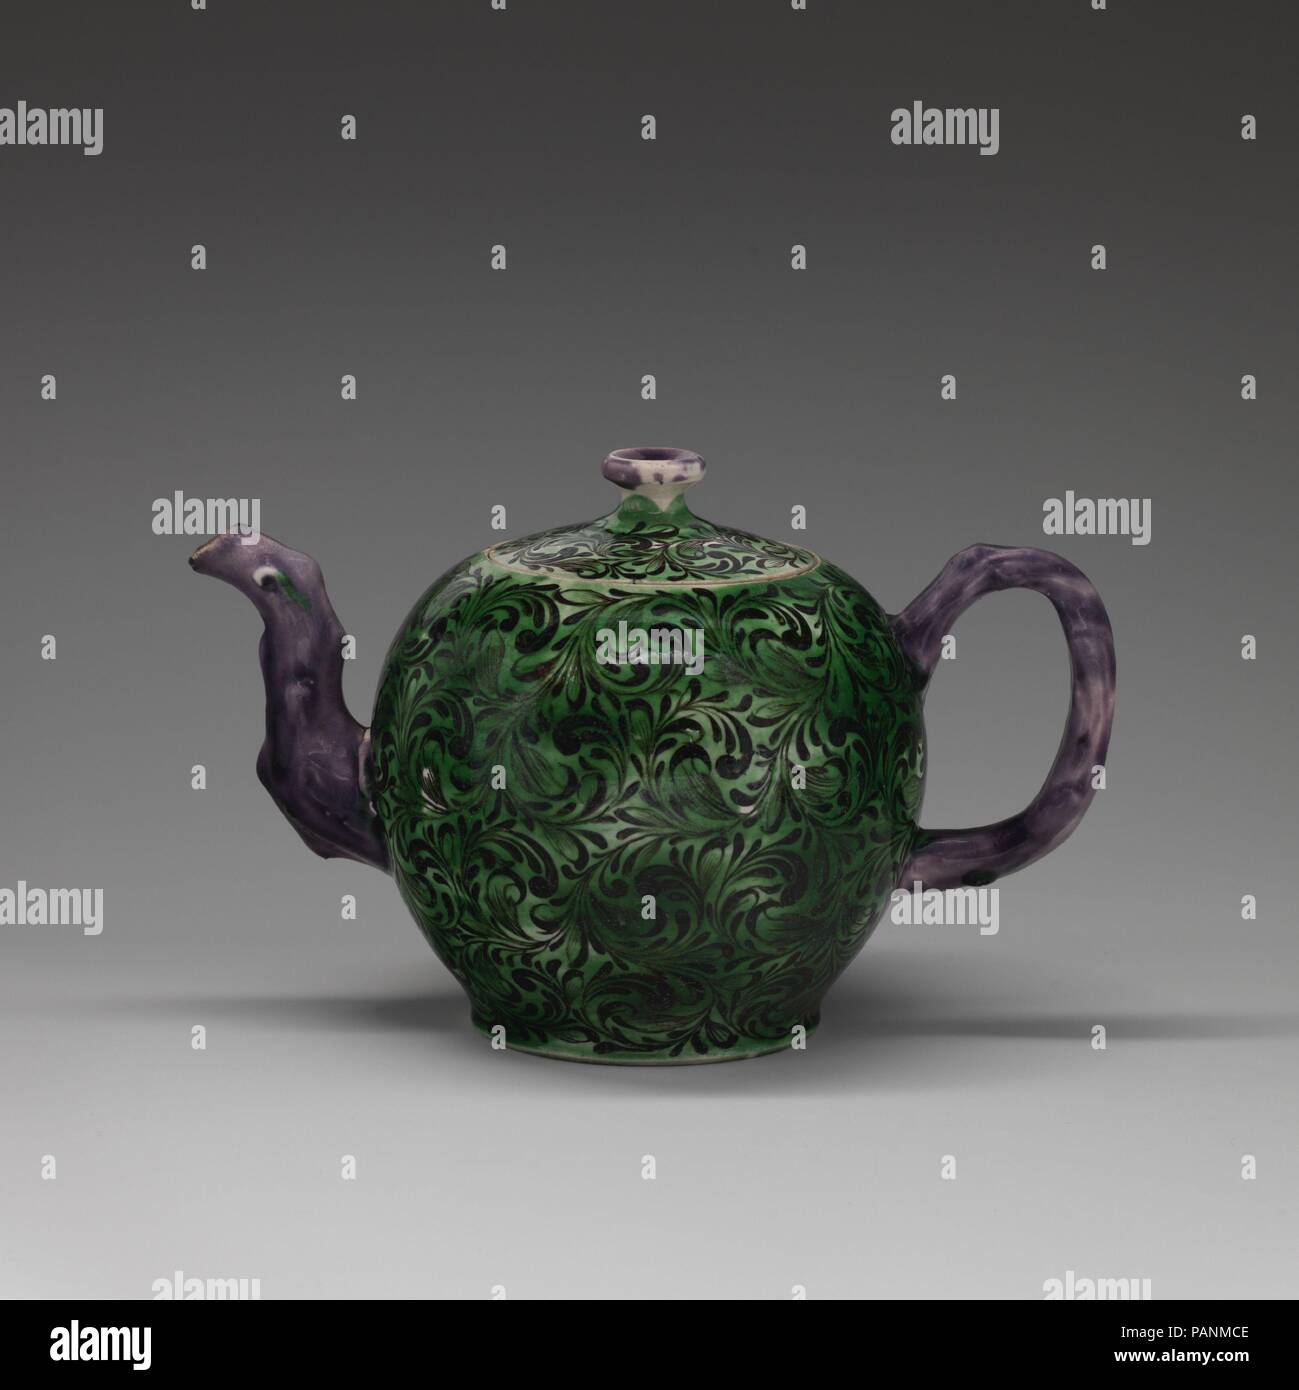 Teapot. Culture: British (American market). Dimensions: 3 5/8 x 5 3/4 in. (9.2 x 14.6 cm). Date: ca. 1760. Museum: Metropolitan Museum of Art, New York, USA. Stock Photo